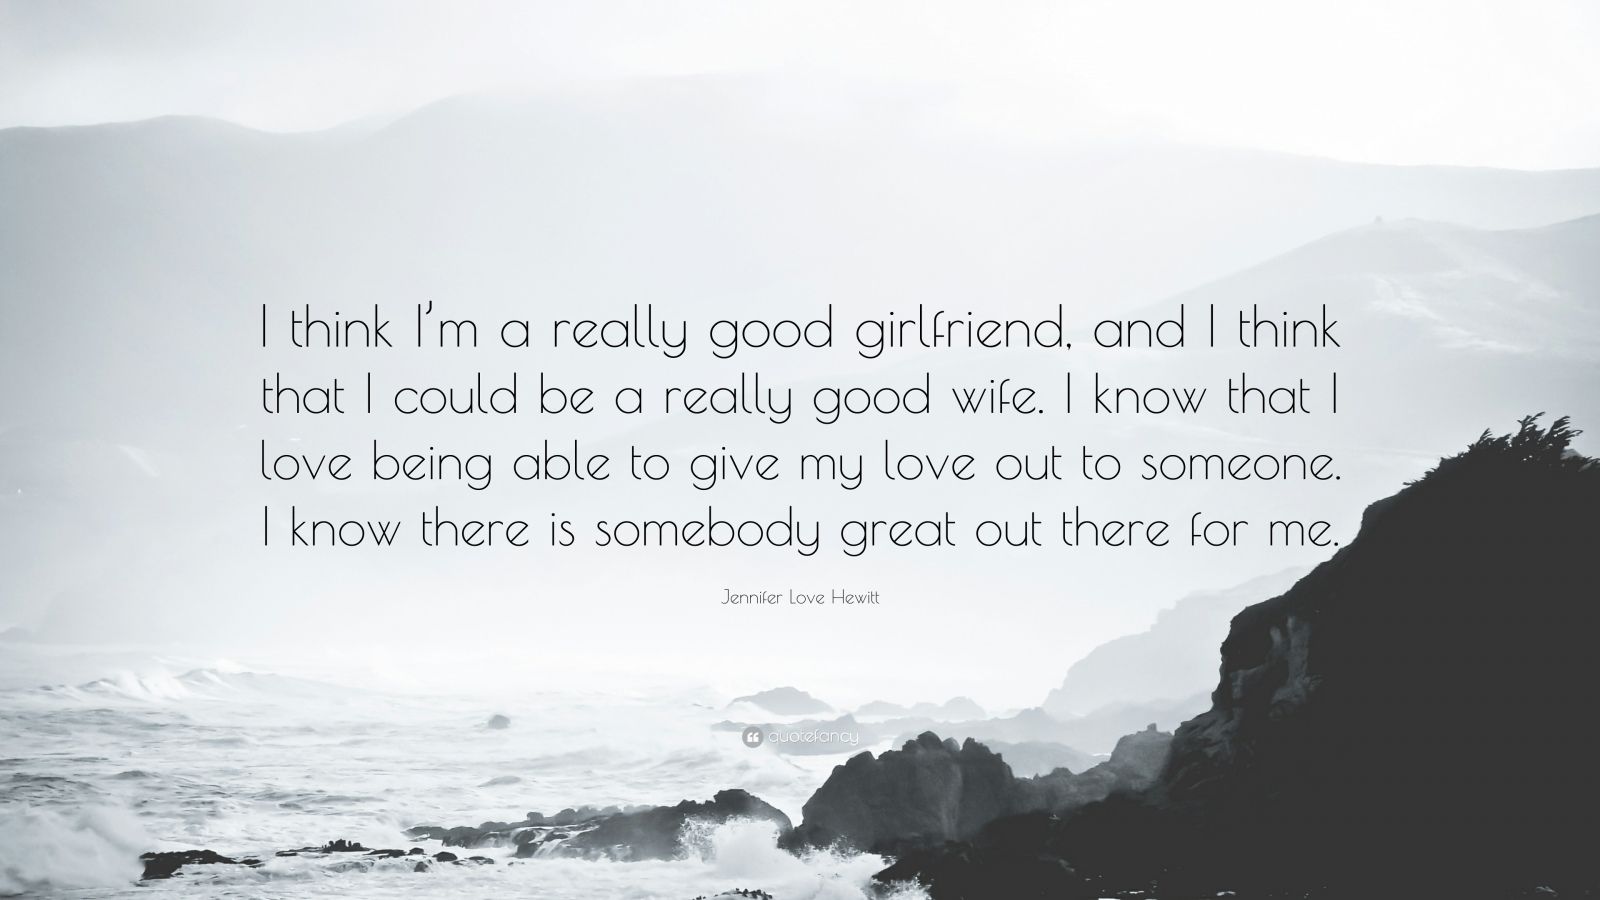 Jennifer Love Hewitt Quote “I think I m a really good girlfriend